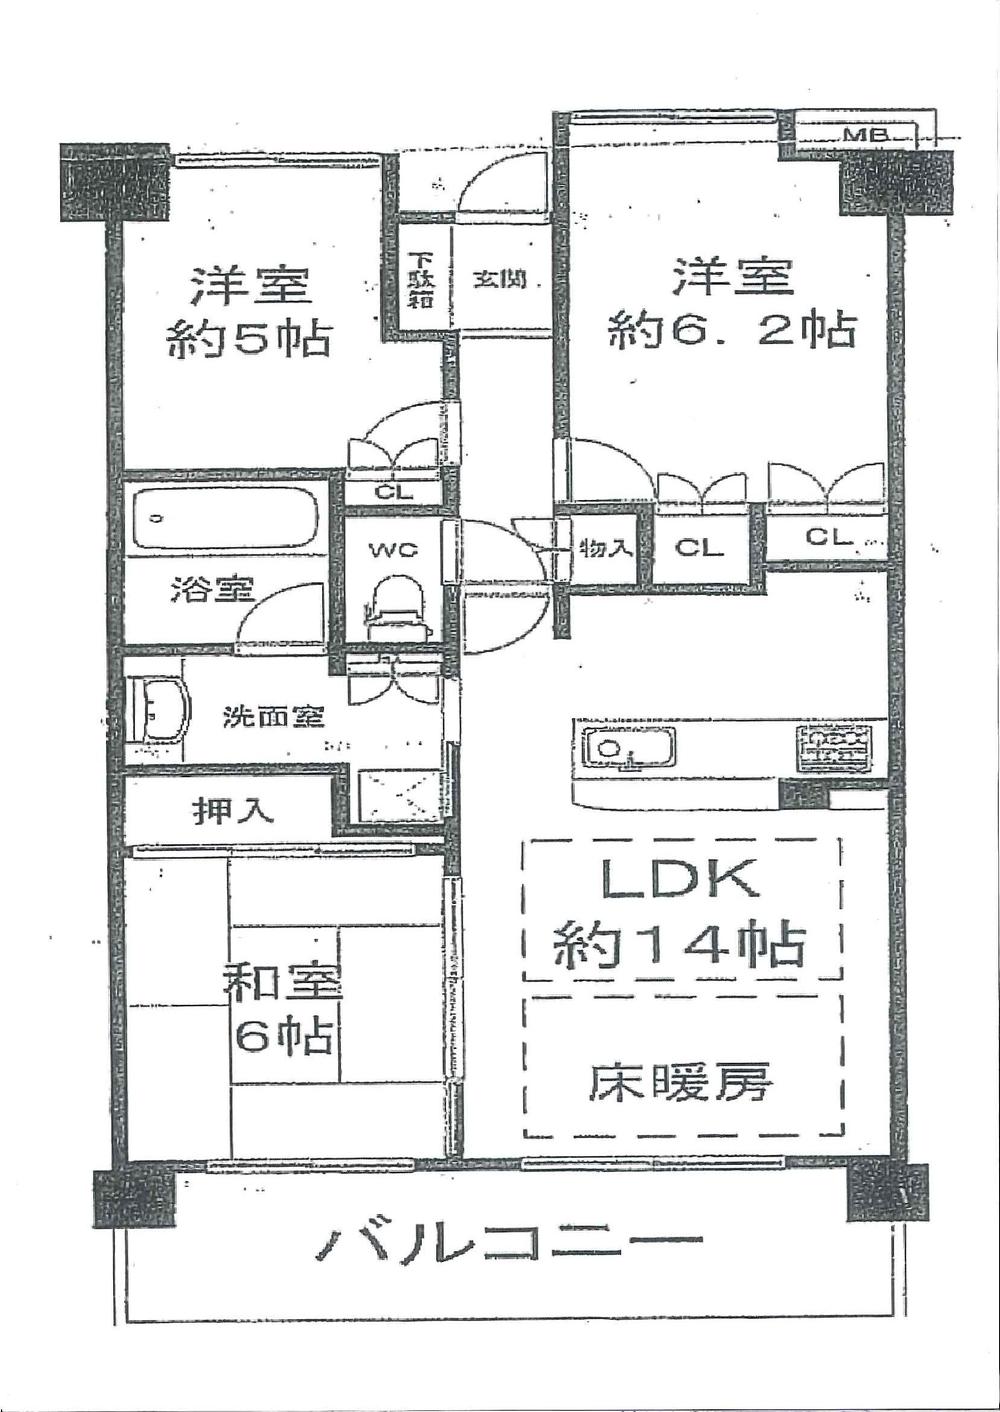 Floor plan. 3LDK, Price 23.8 million yen, Occupied area 68.18 sq m , Balcony area 11.78 sq m